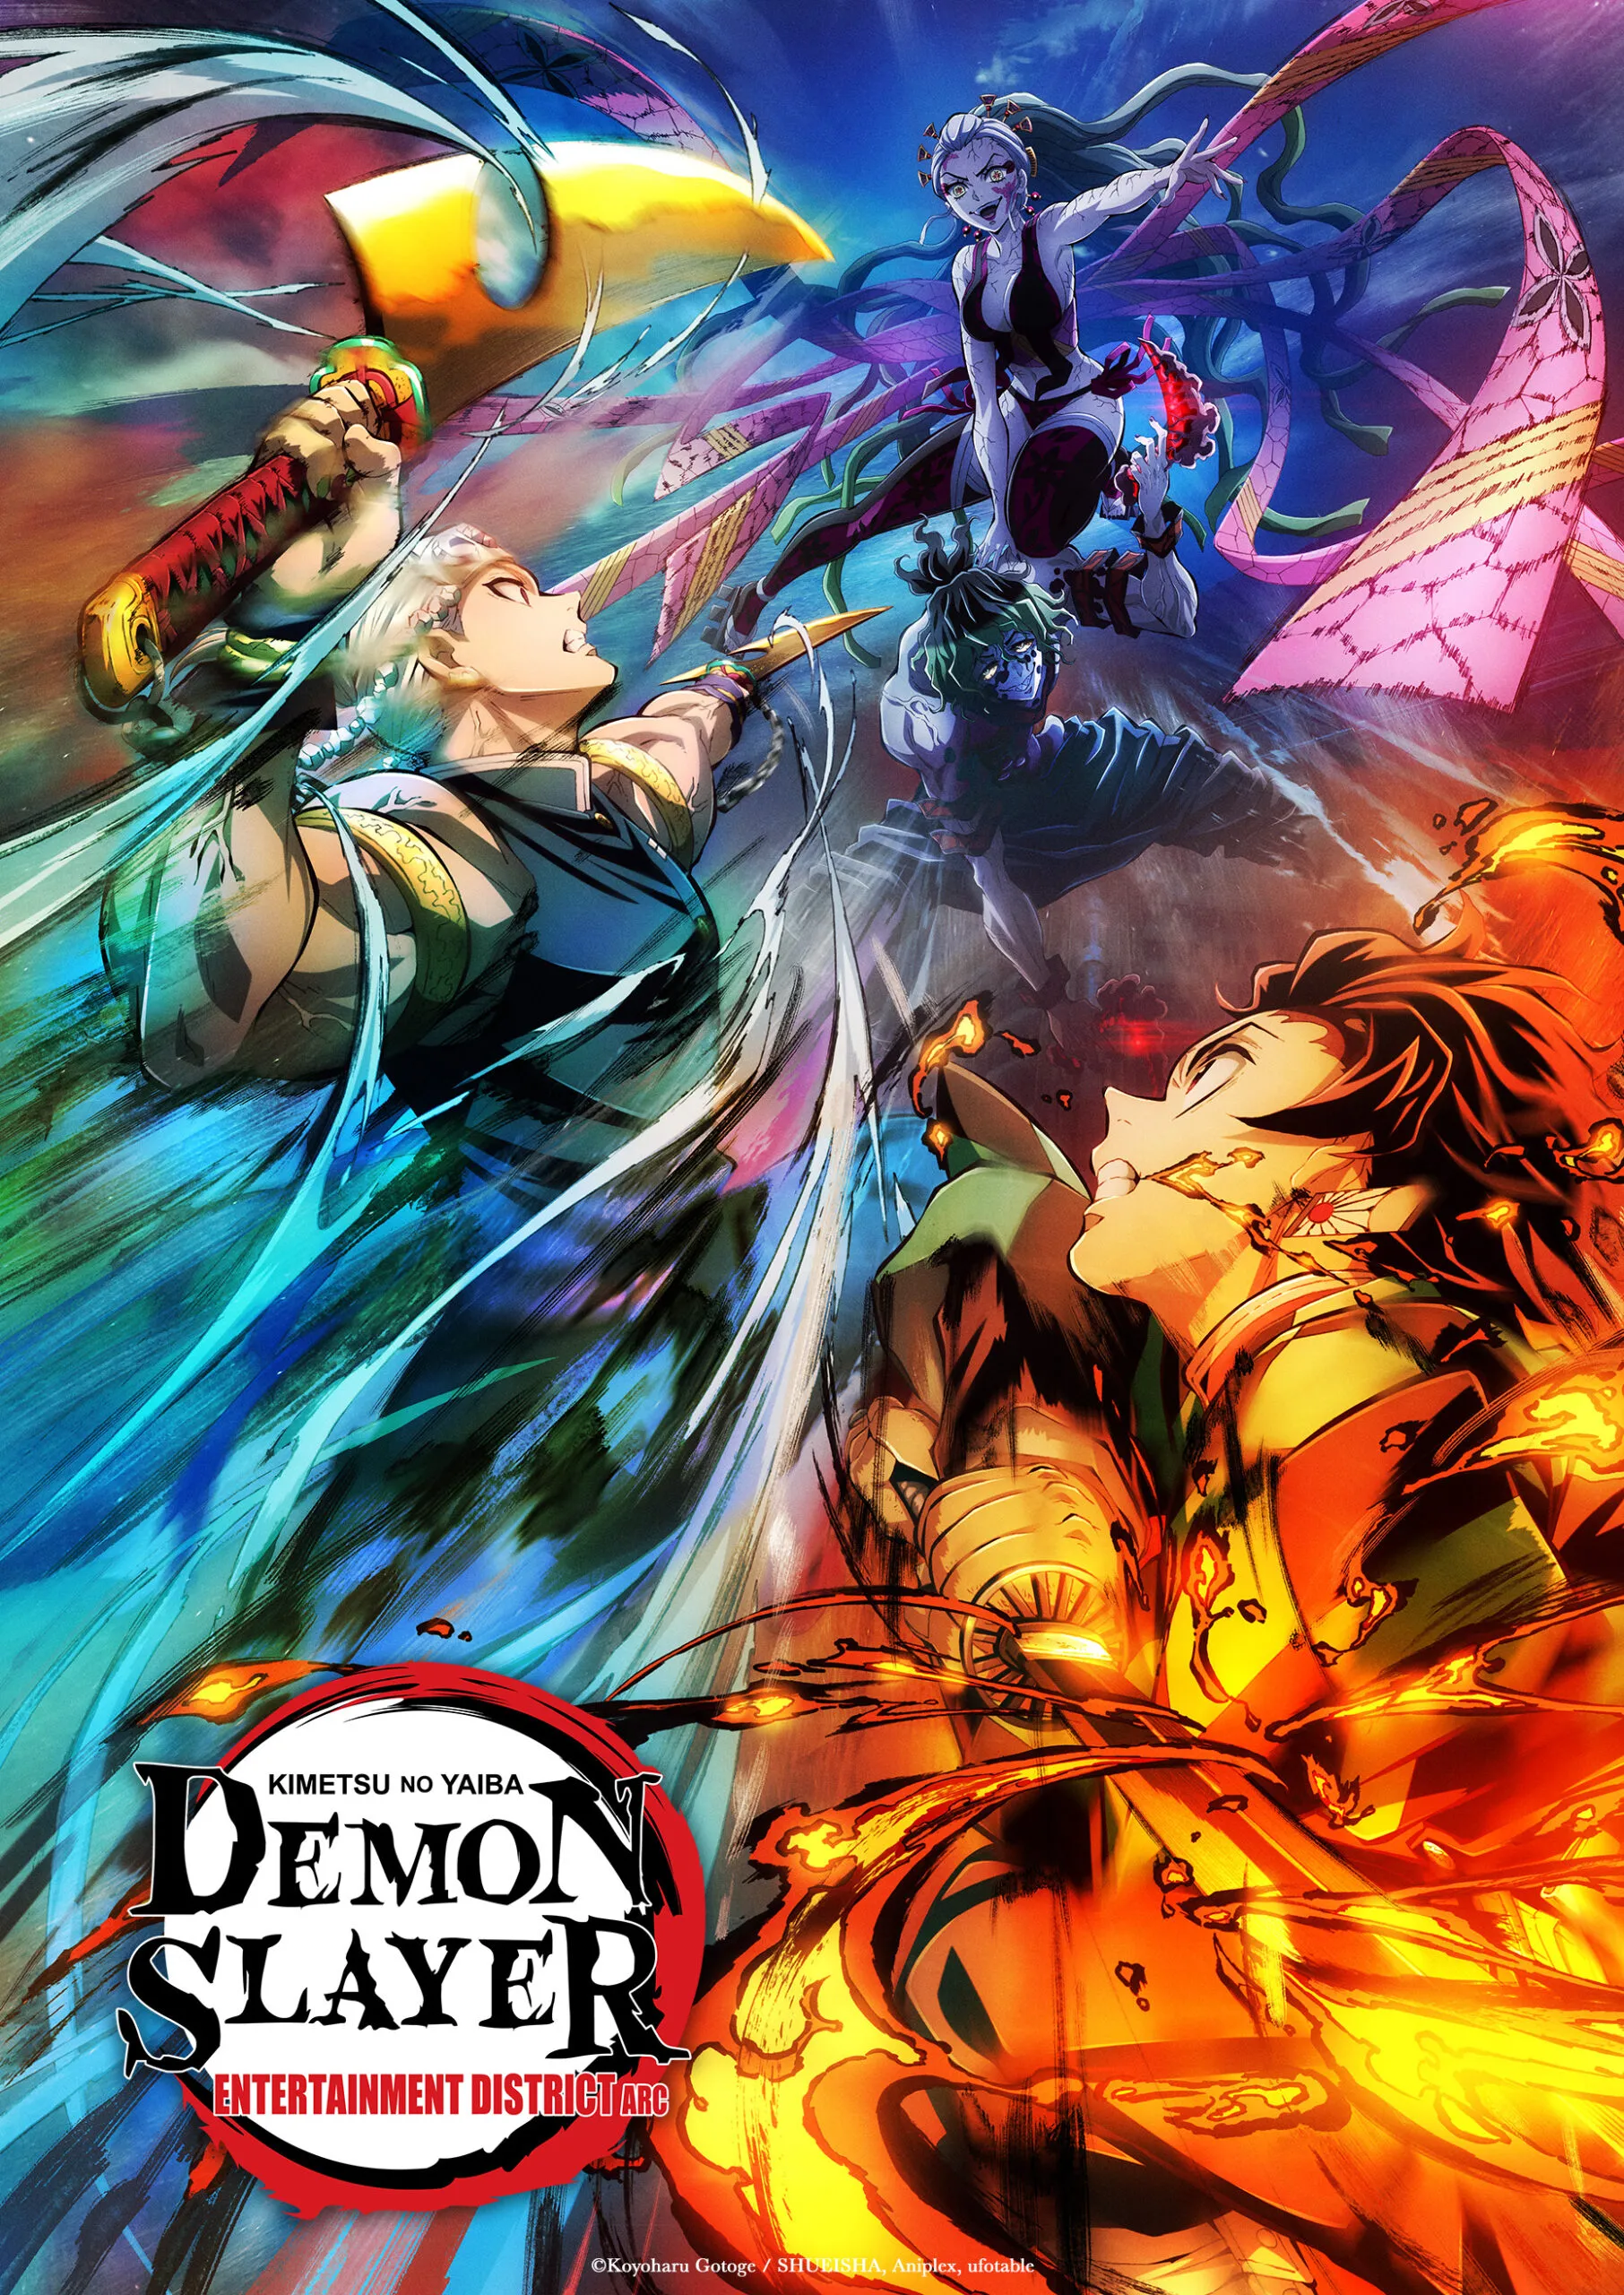 Demon Slayer Season 2 Poster Teases a Big Fight